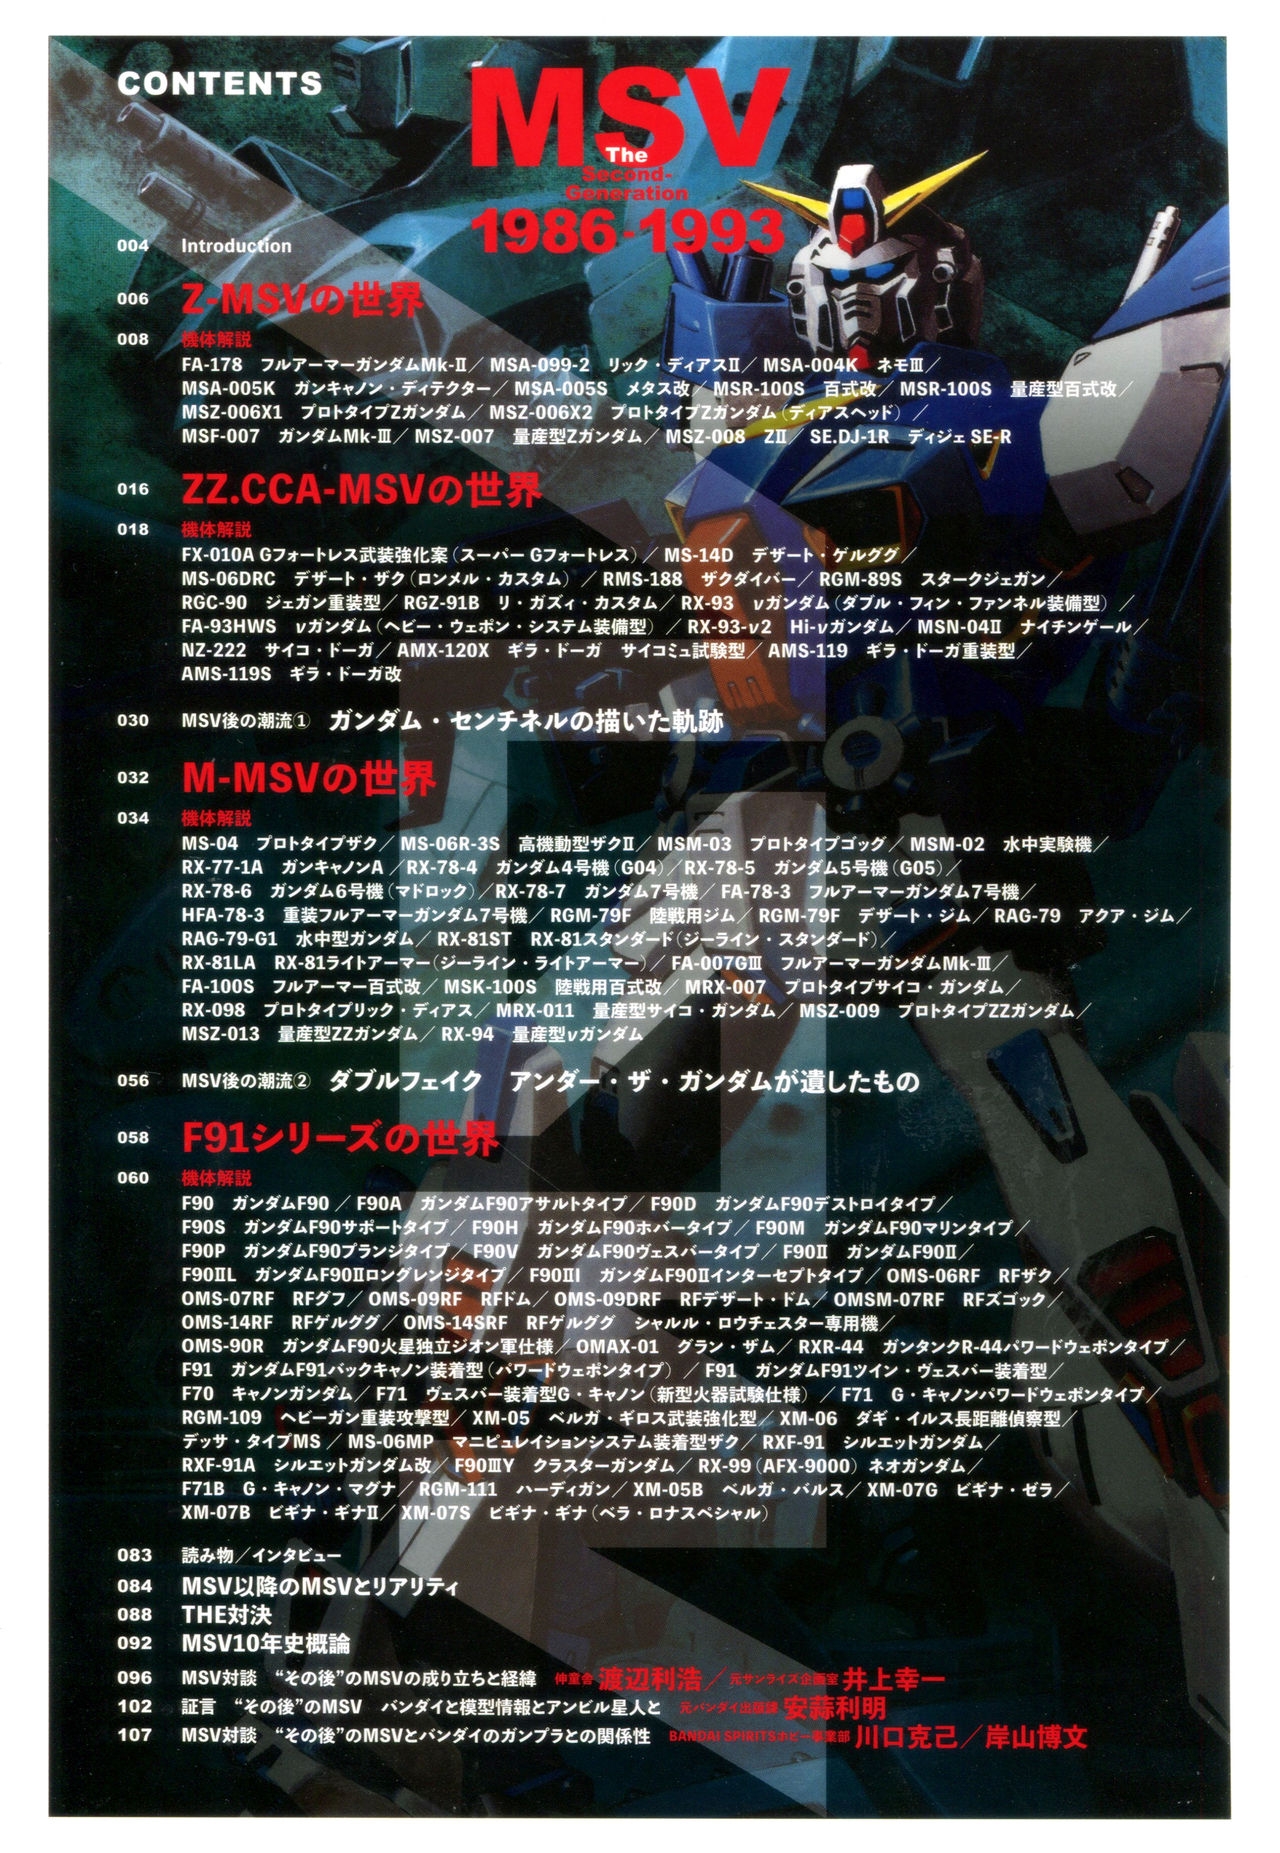 Mobile Suit Gundam - MSV The Second - Generation 1986-1993 2